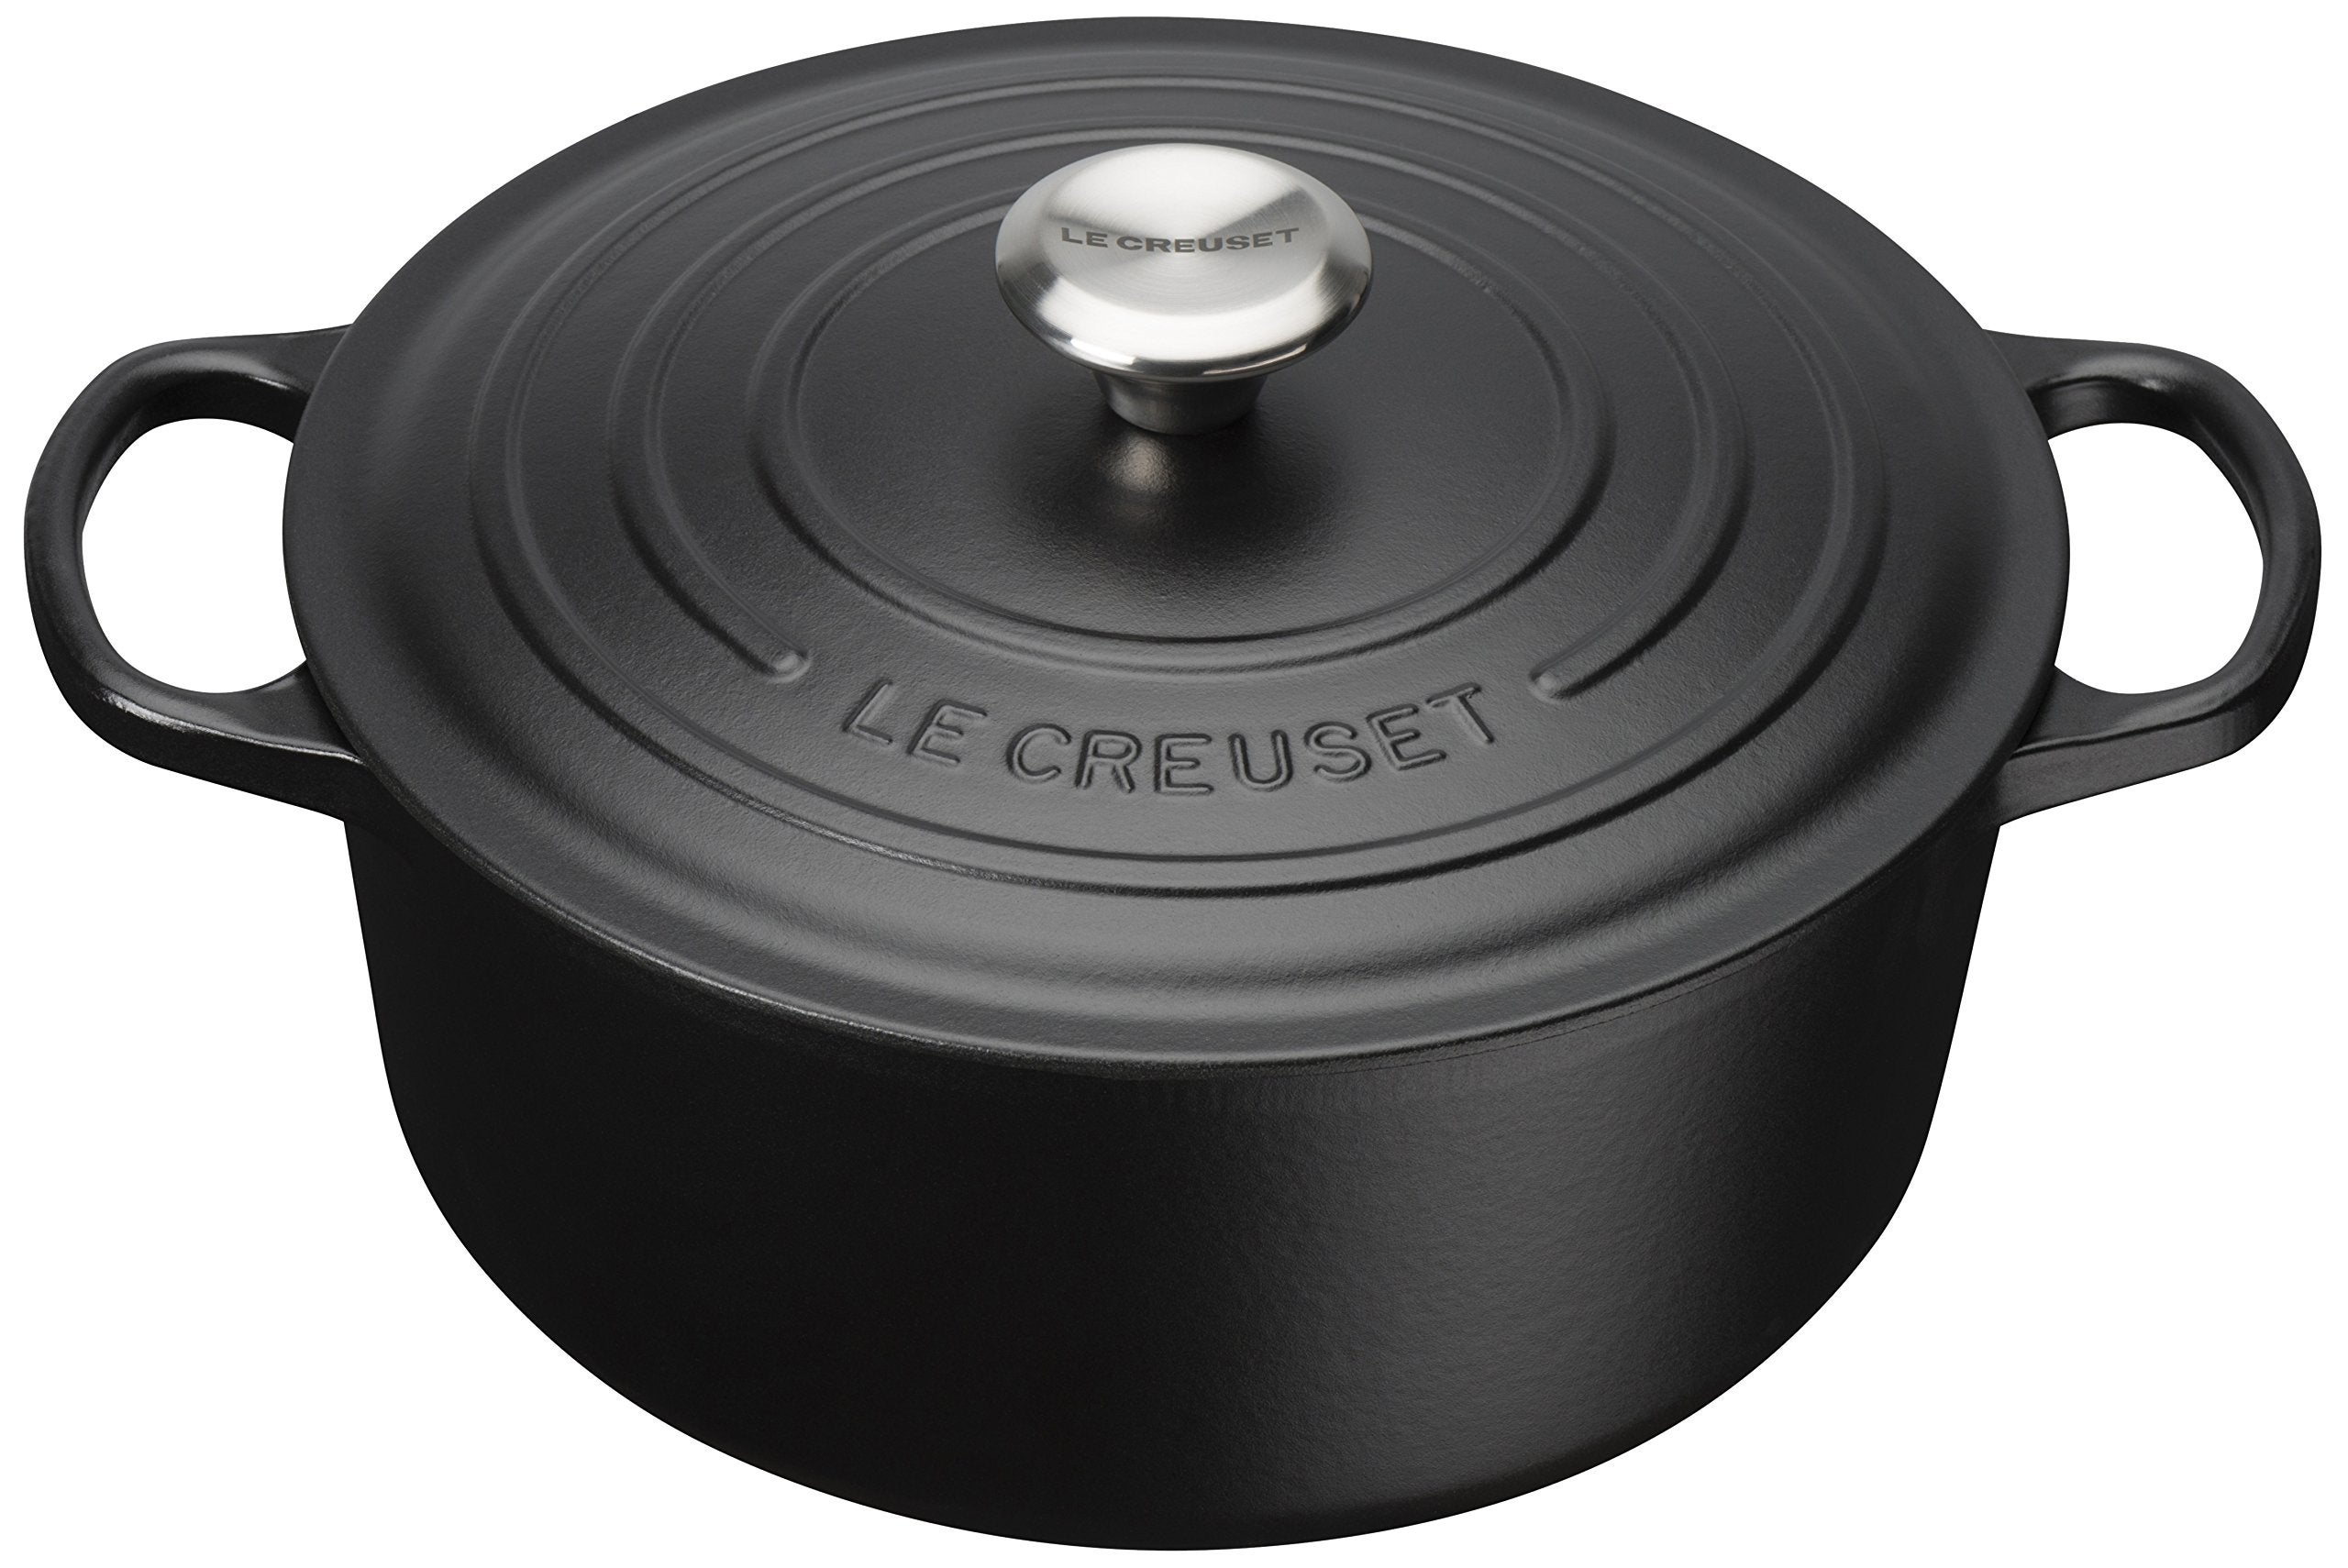 Le Creuset + Enameled Cast Iron Signature Round Dutch Oven